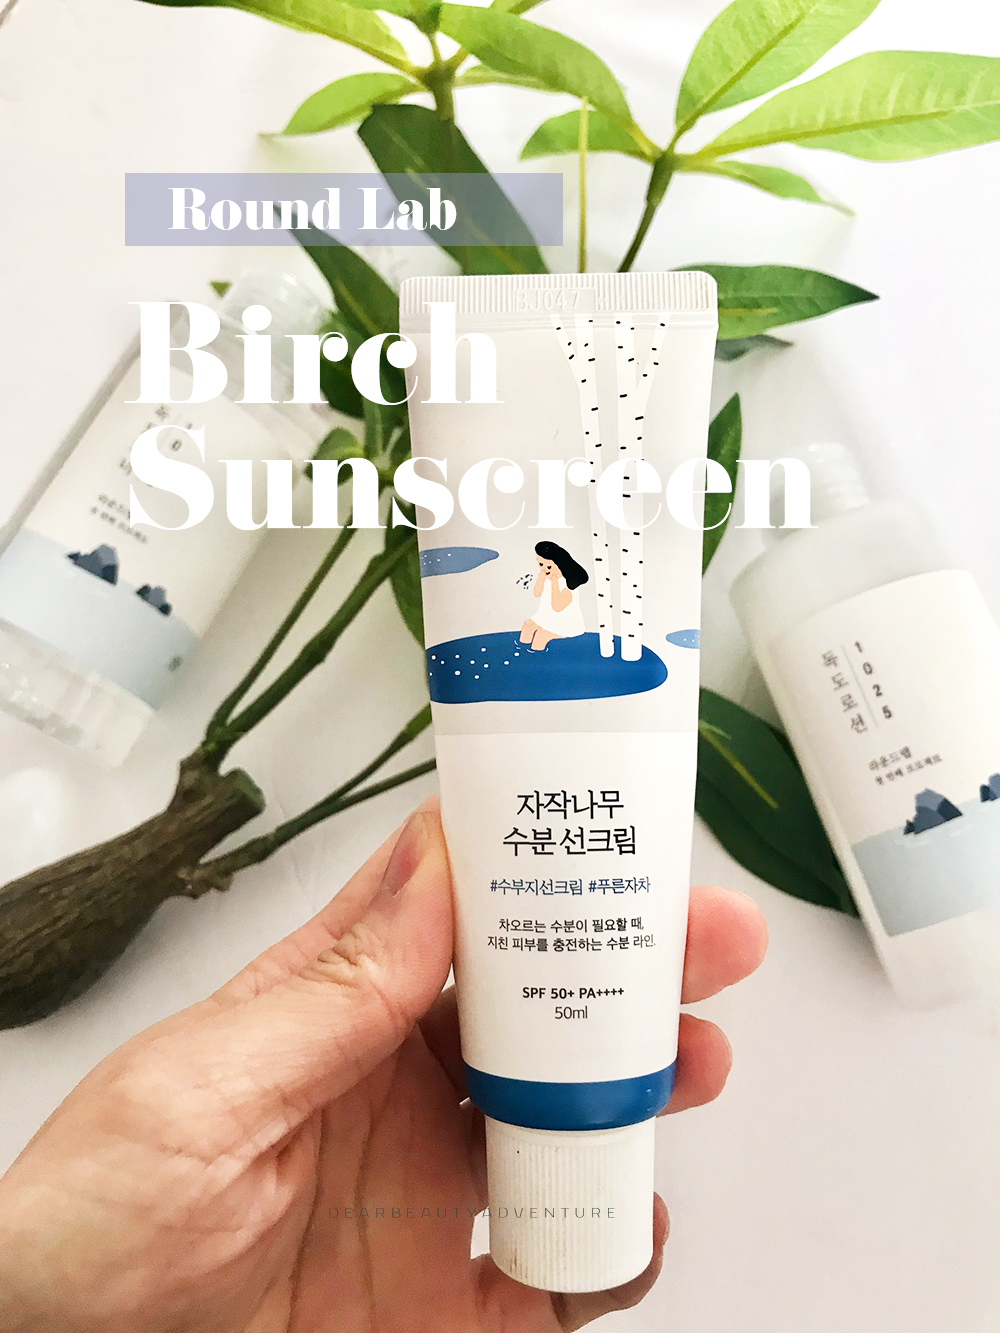 round lab birch sunscreen review